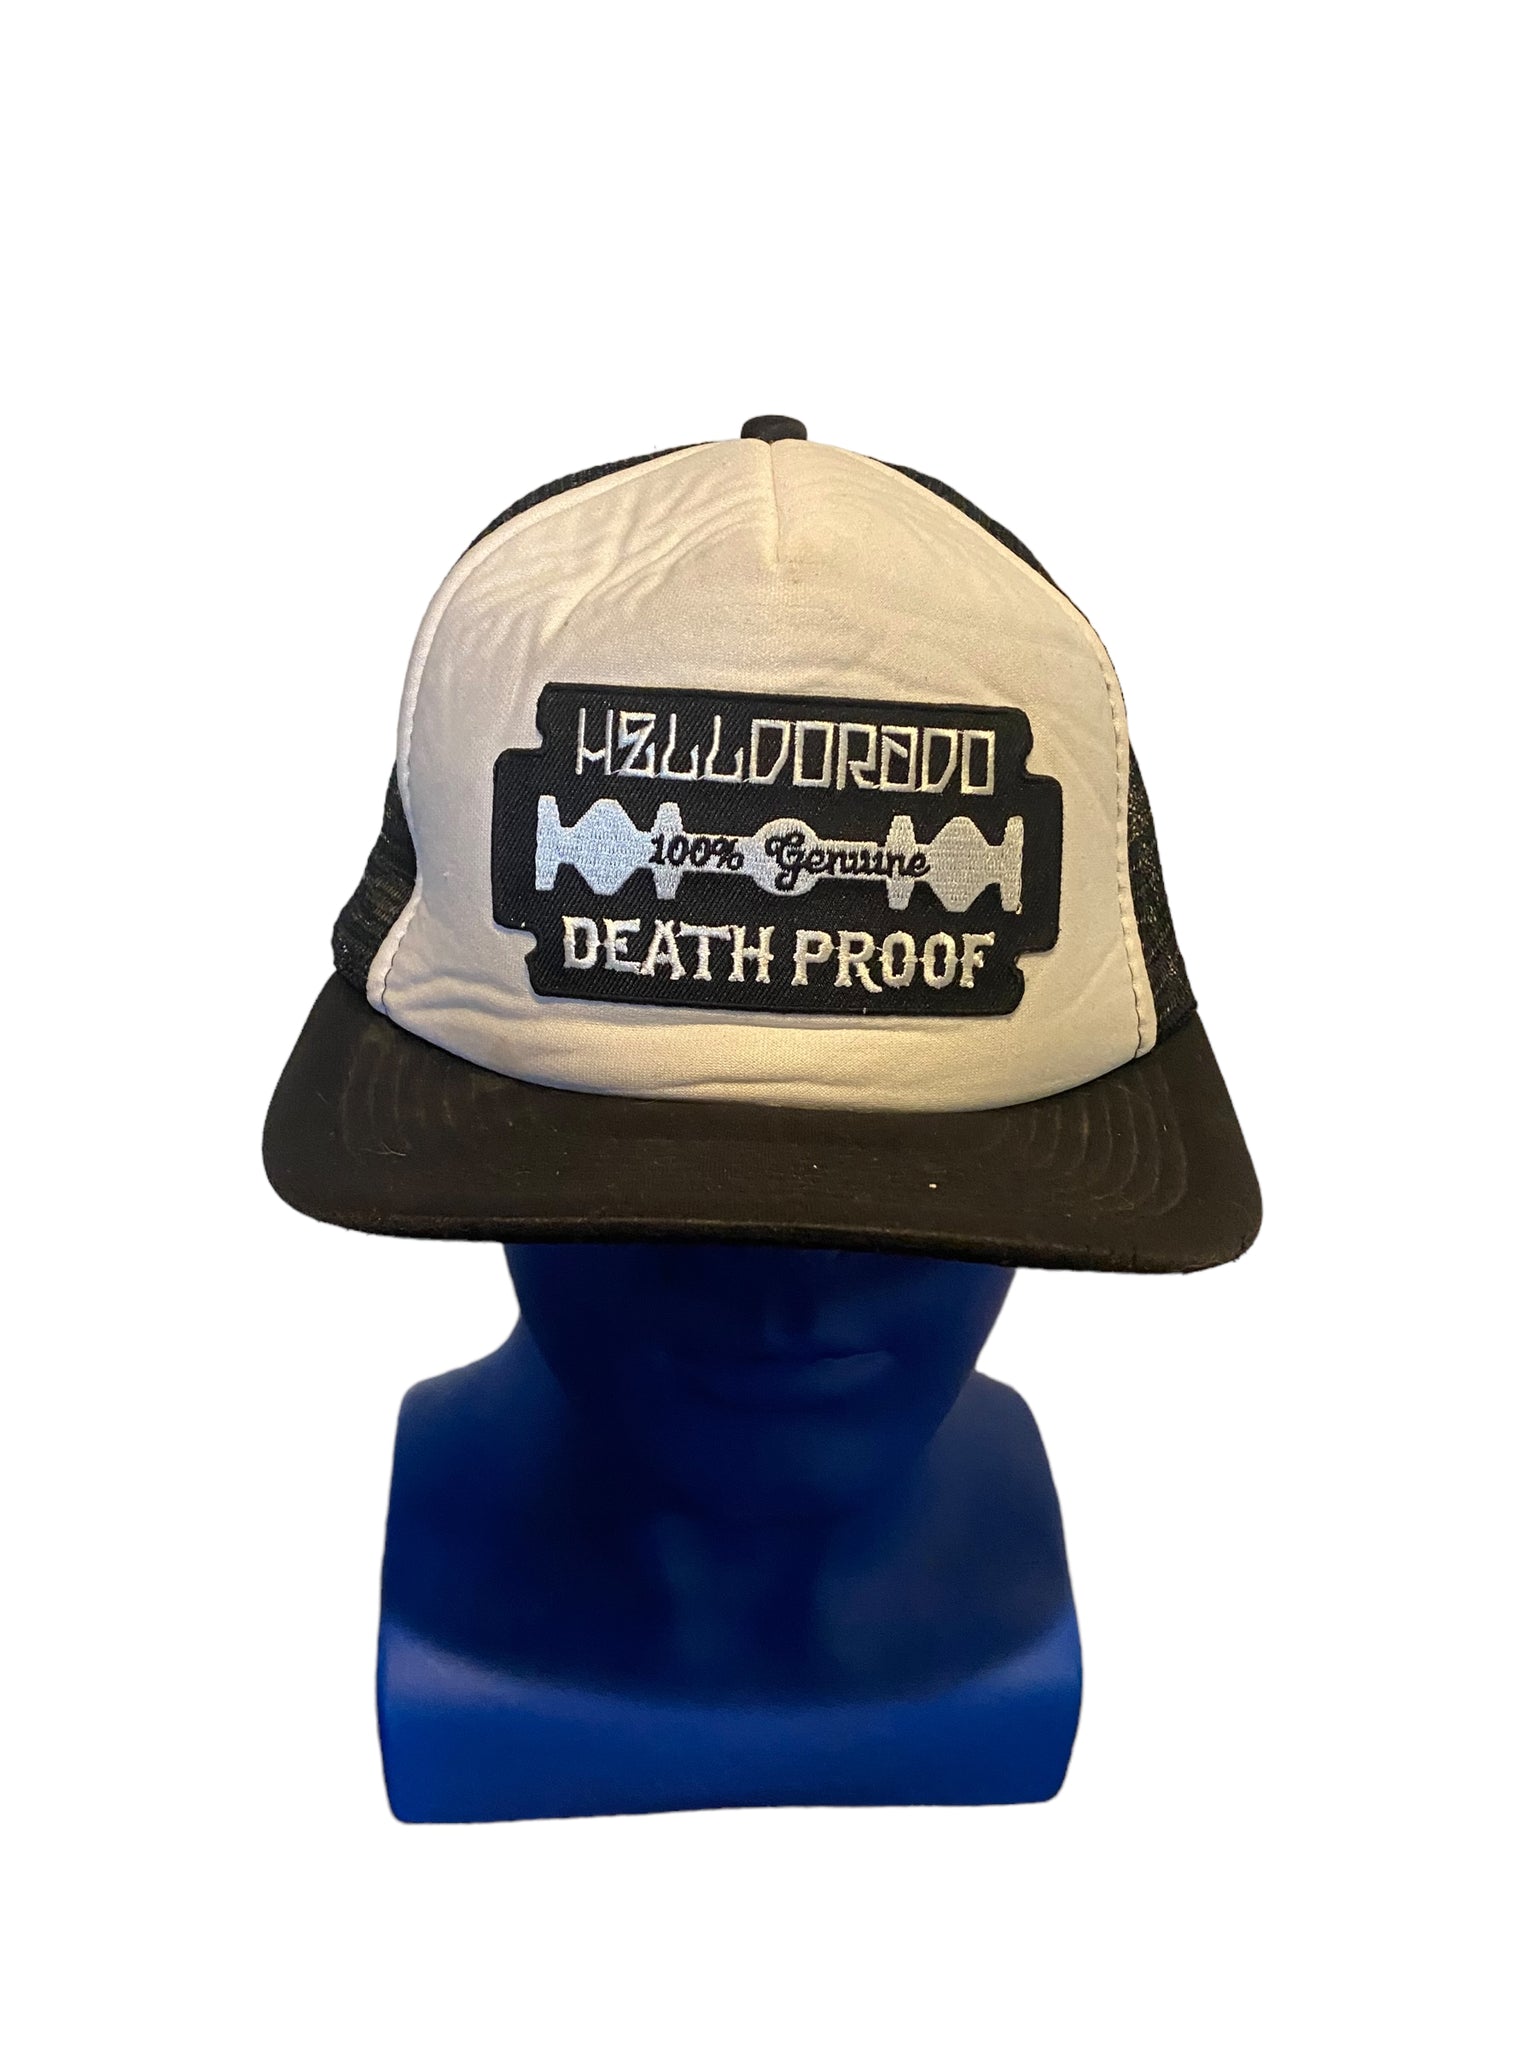 helldorado 100% genuine death proof patch trucker hat